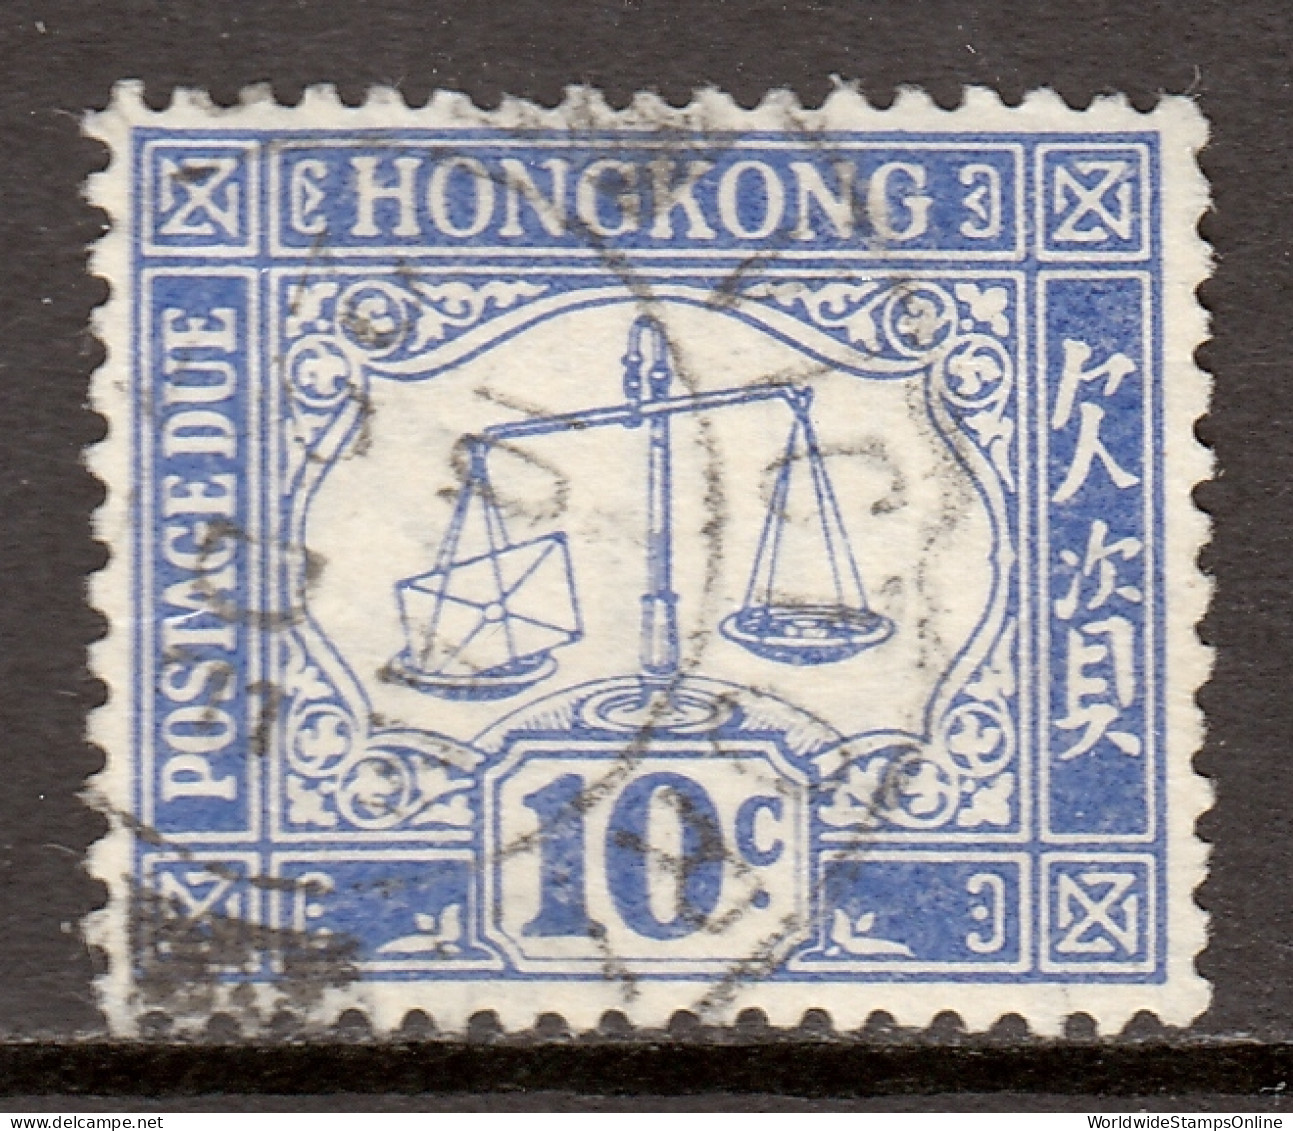 Hong Kong - Scott #J5 - Sideways Wmk - Used - SCV $15 - Postage Due